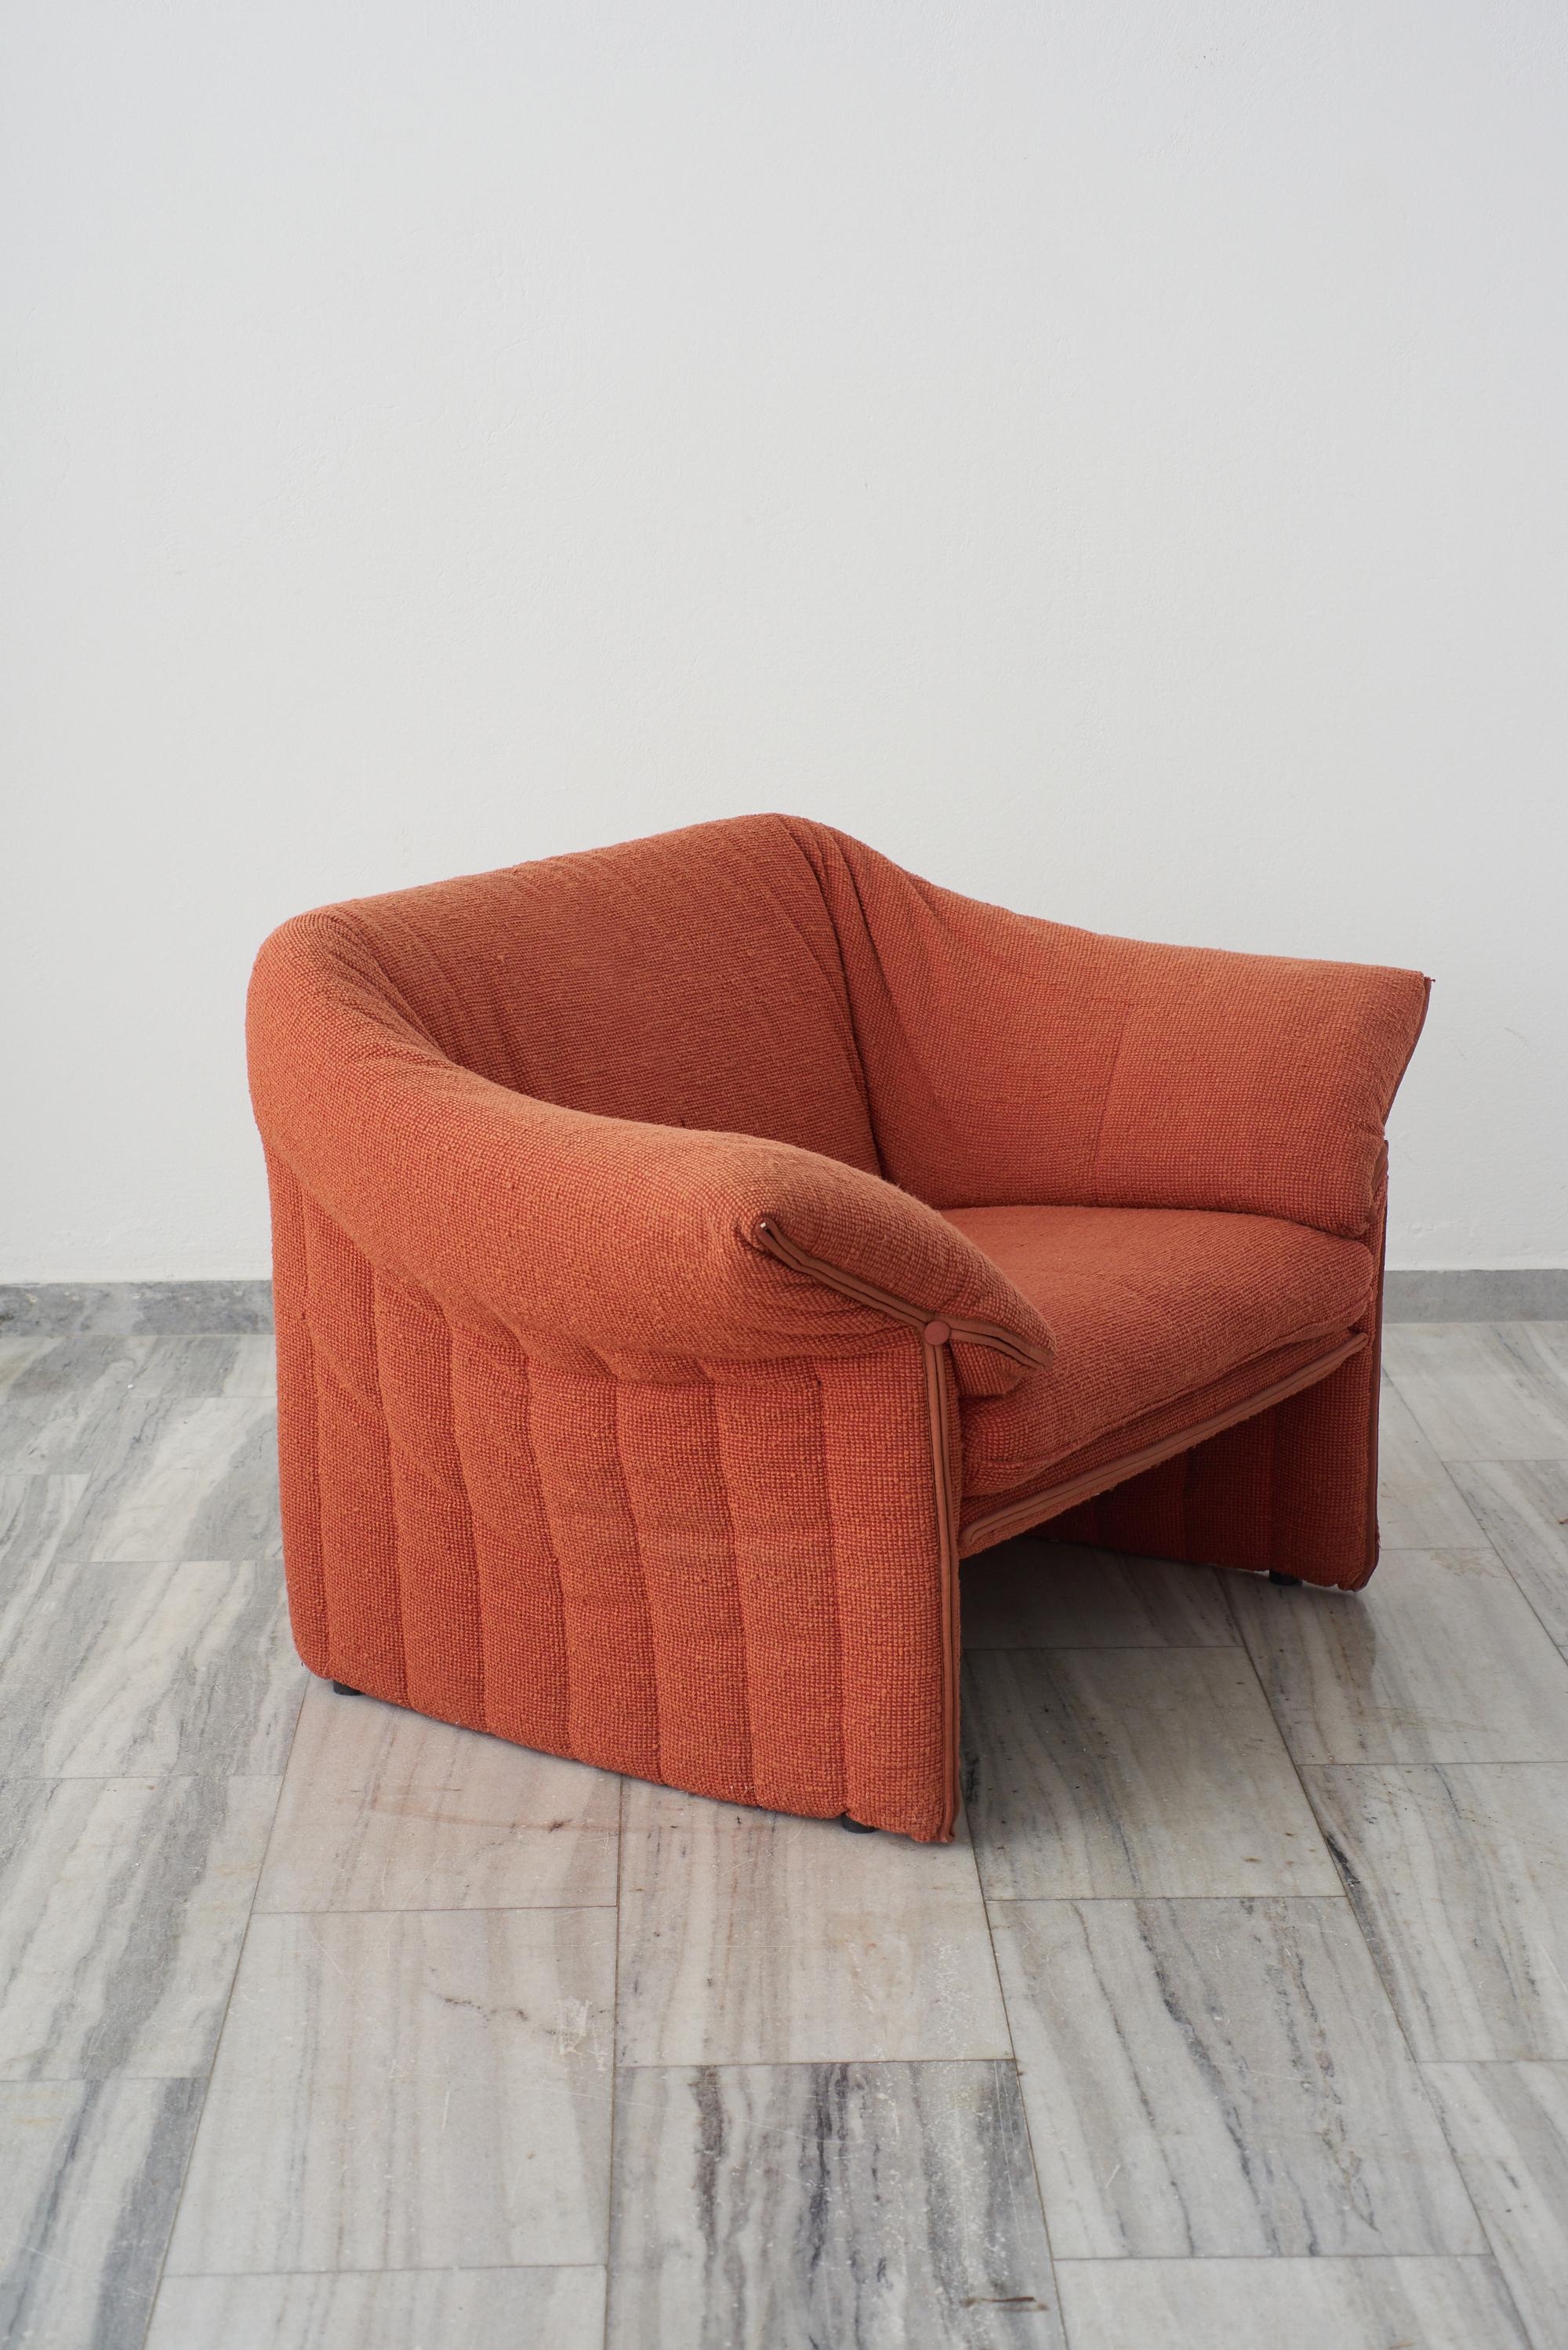 Modern Le Stelle armchair by Mario Bellini for B&B Italia, 1974. For Sale